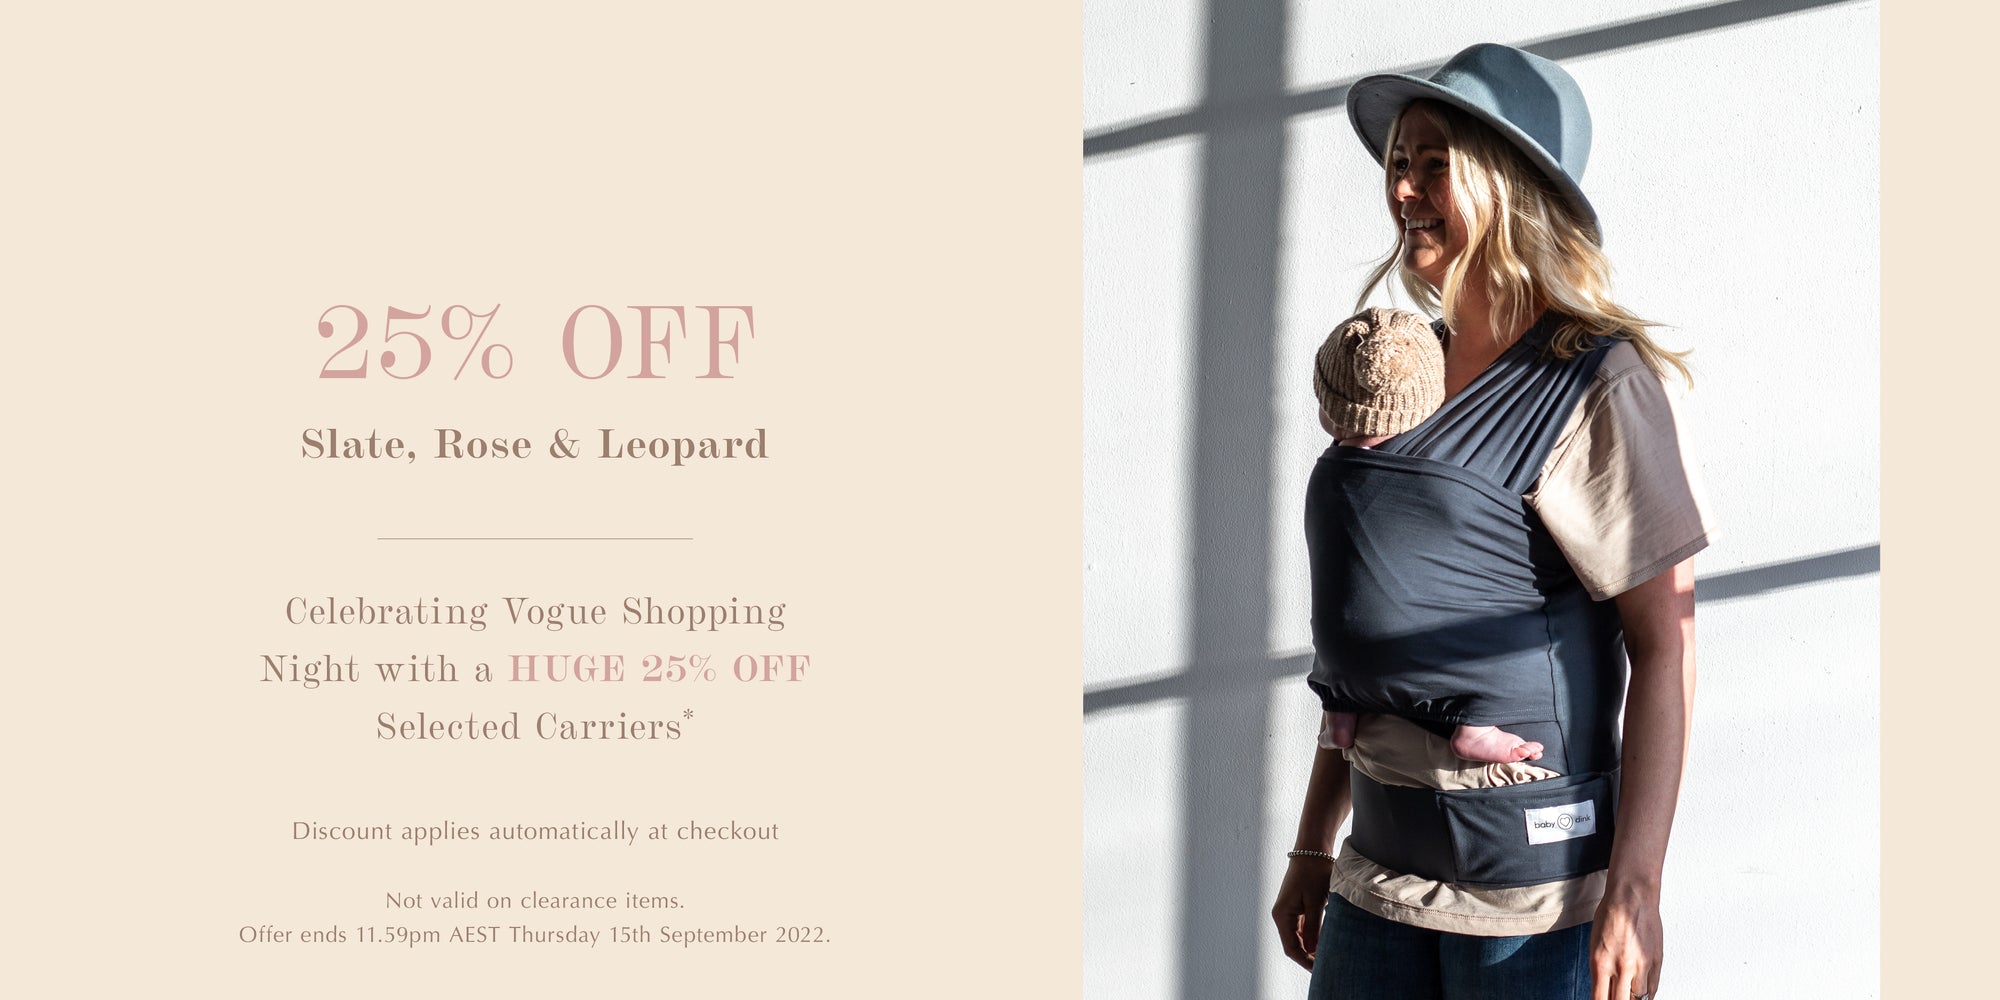 Vogue Shopping Night - 25% Off Rose, Slate & Leopard